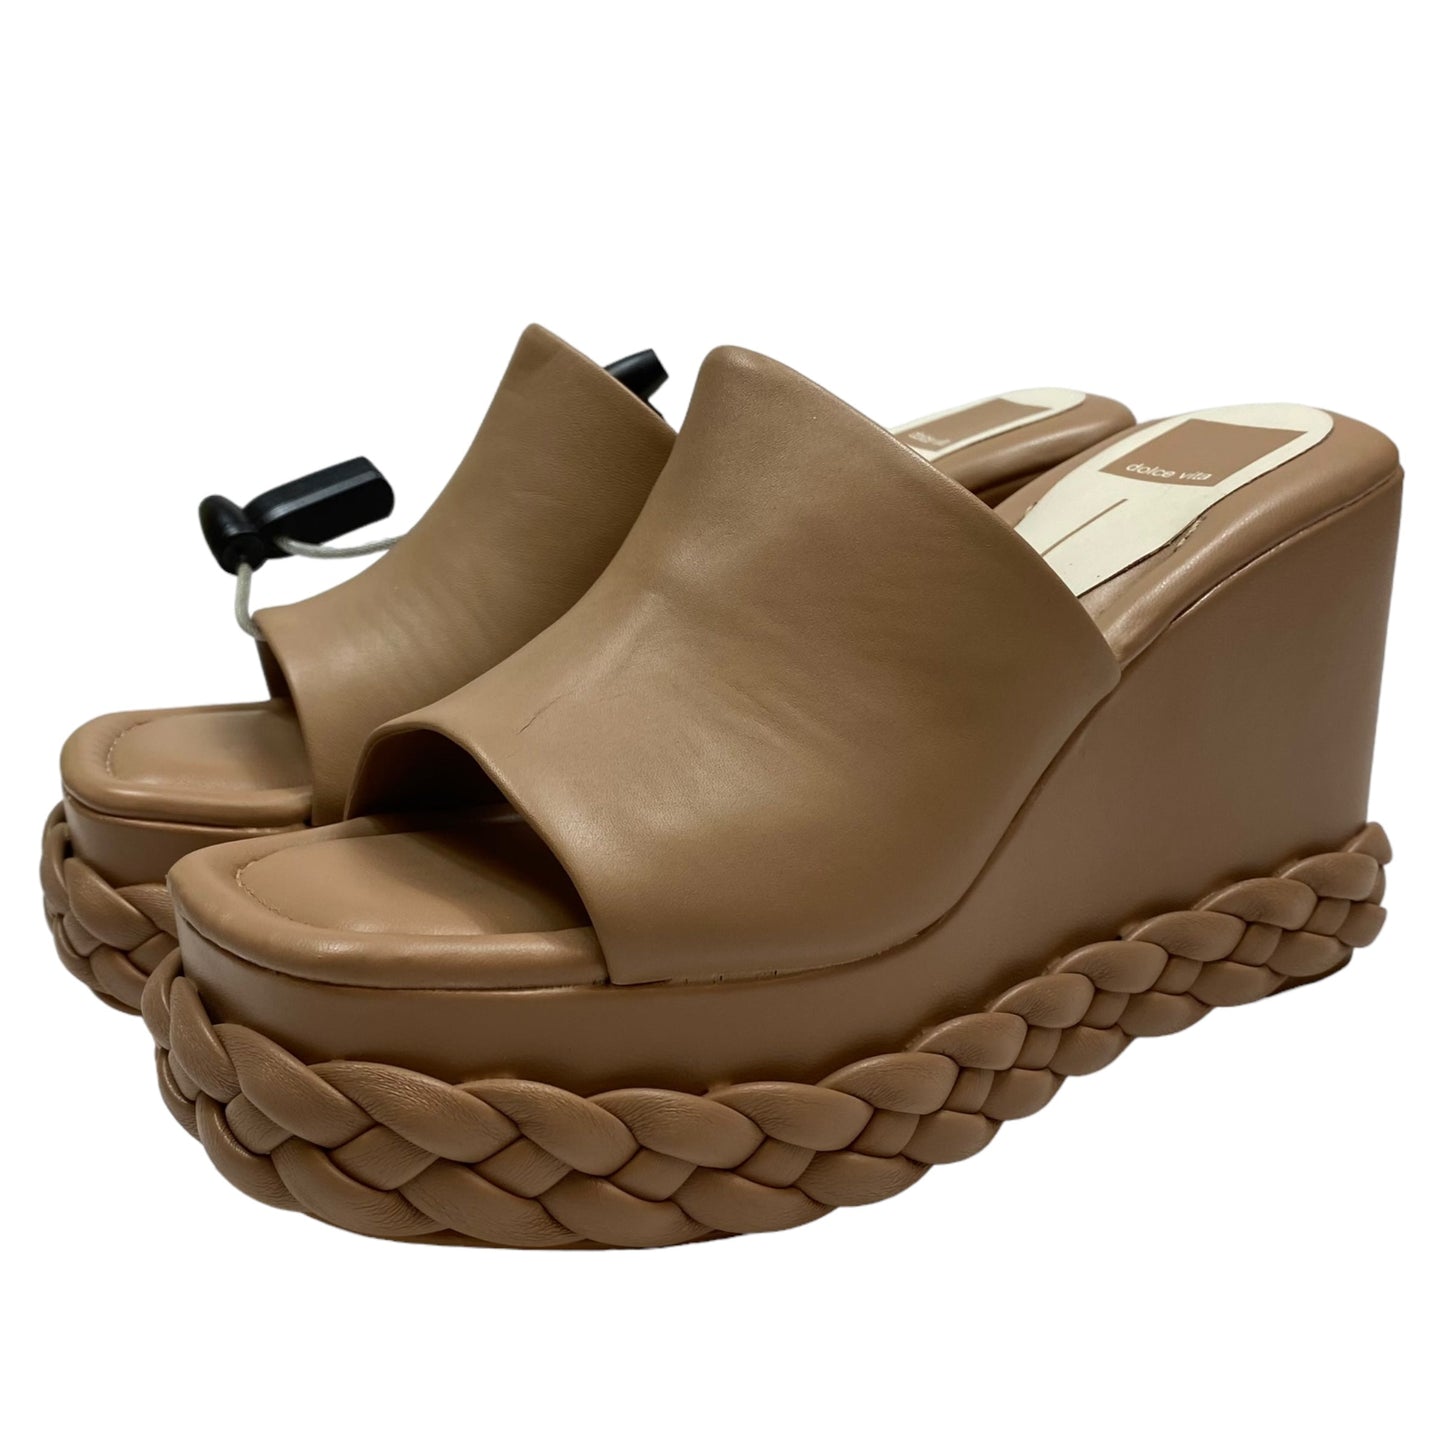 Tan Sandals Heels Wedge Dolce Vita, Size 8.5